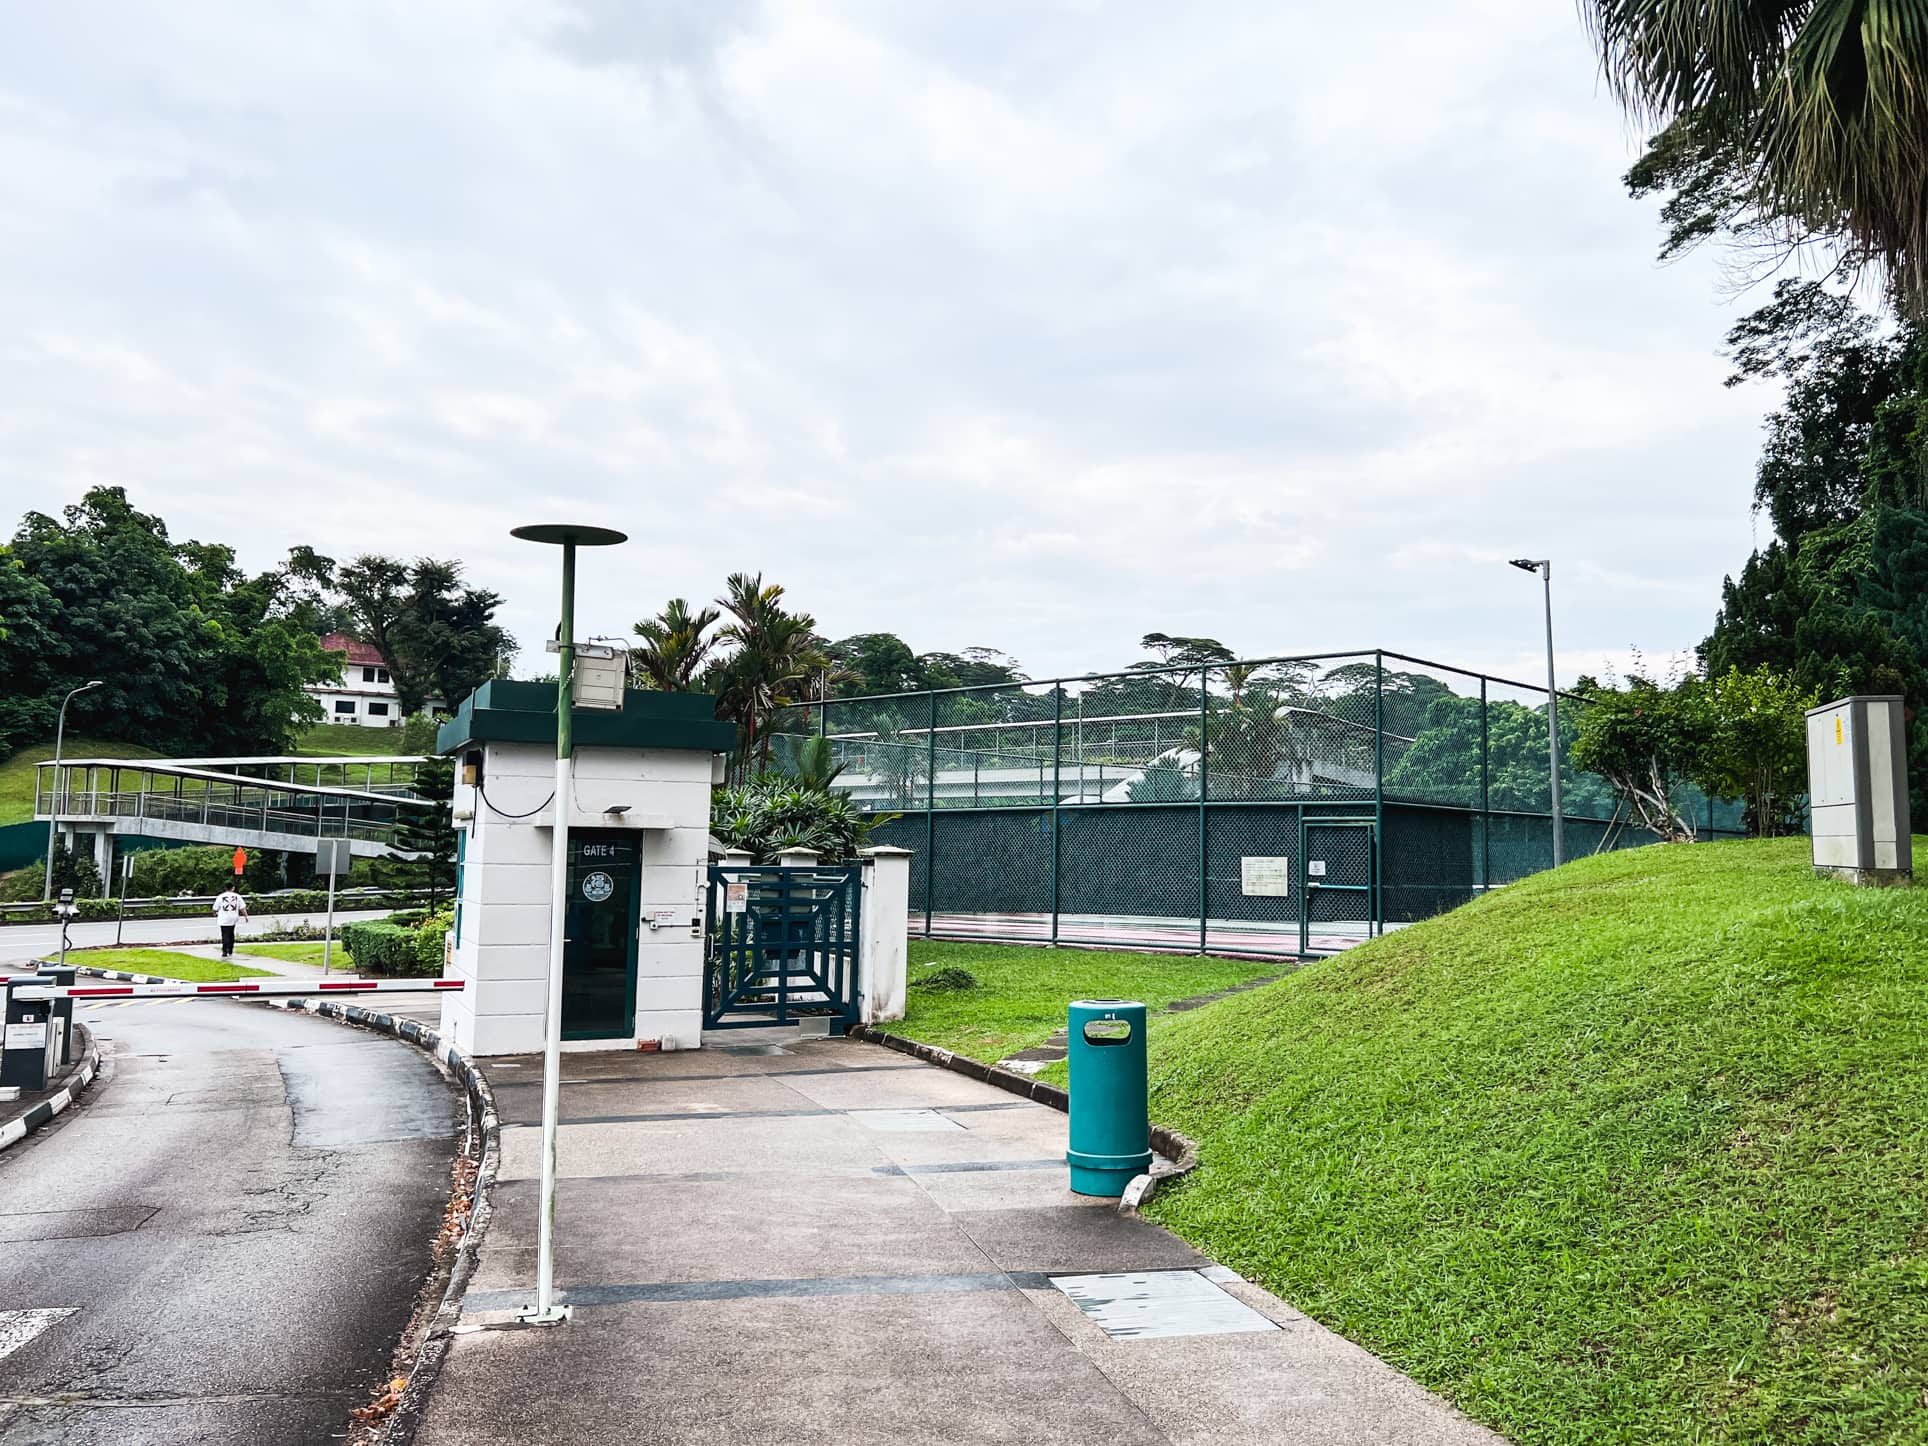 Pine Grove tennis court 18